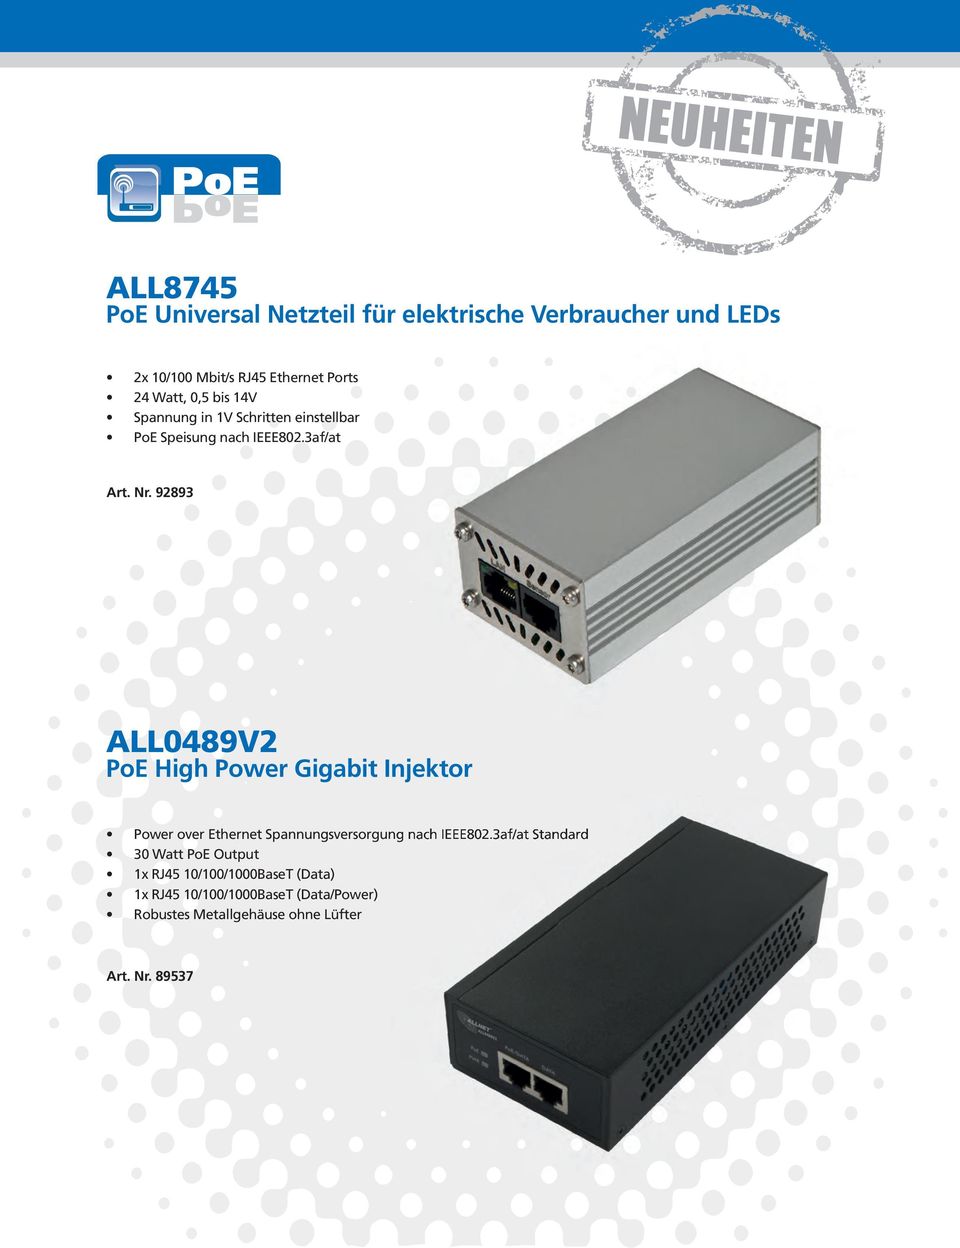 92893 ALL0489V2 PoE High Power Gigabit Injektor Power over Ethernet Spannungsversorgung nach IEEE802.